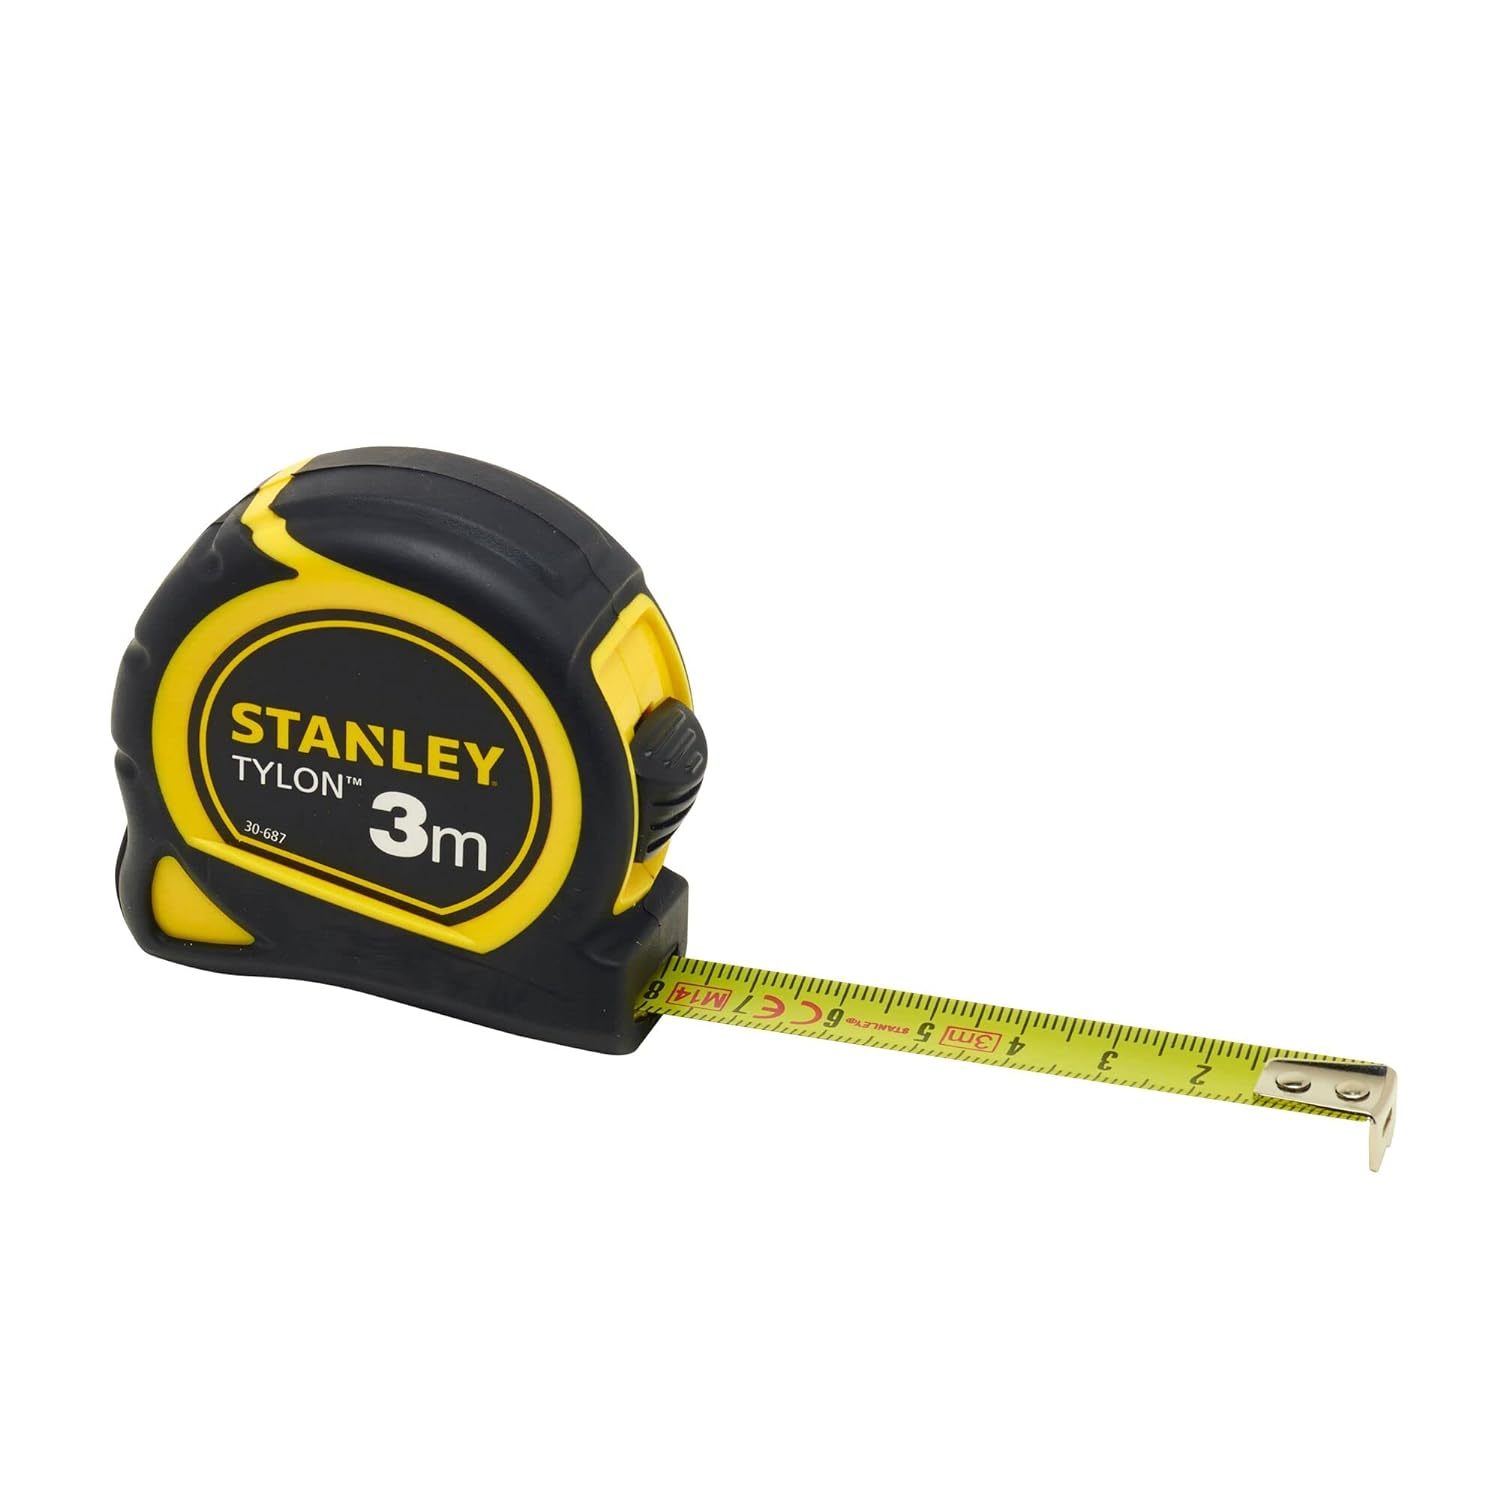 Stanley 0-30-687 Tylon Tape Measure, and 50 similar items